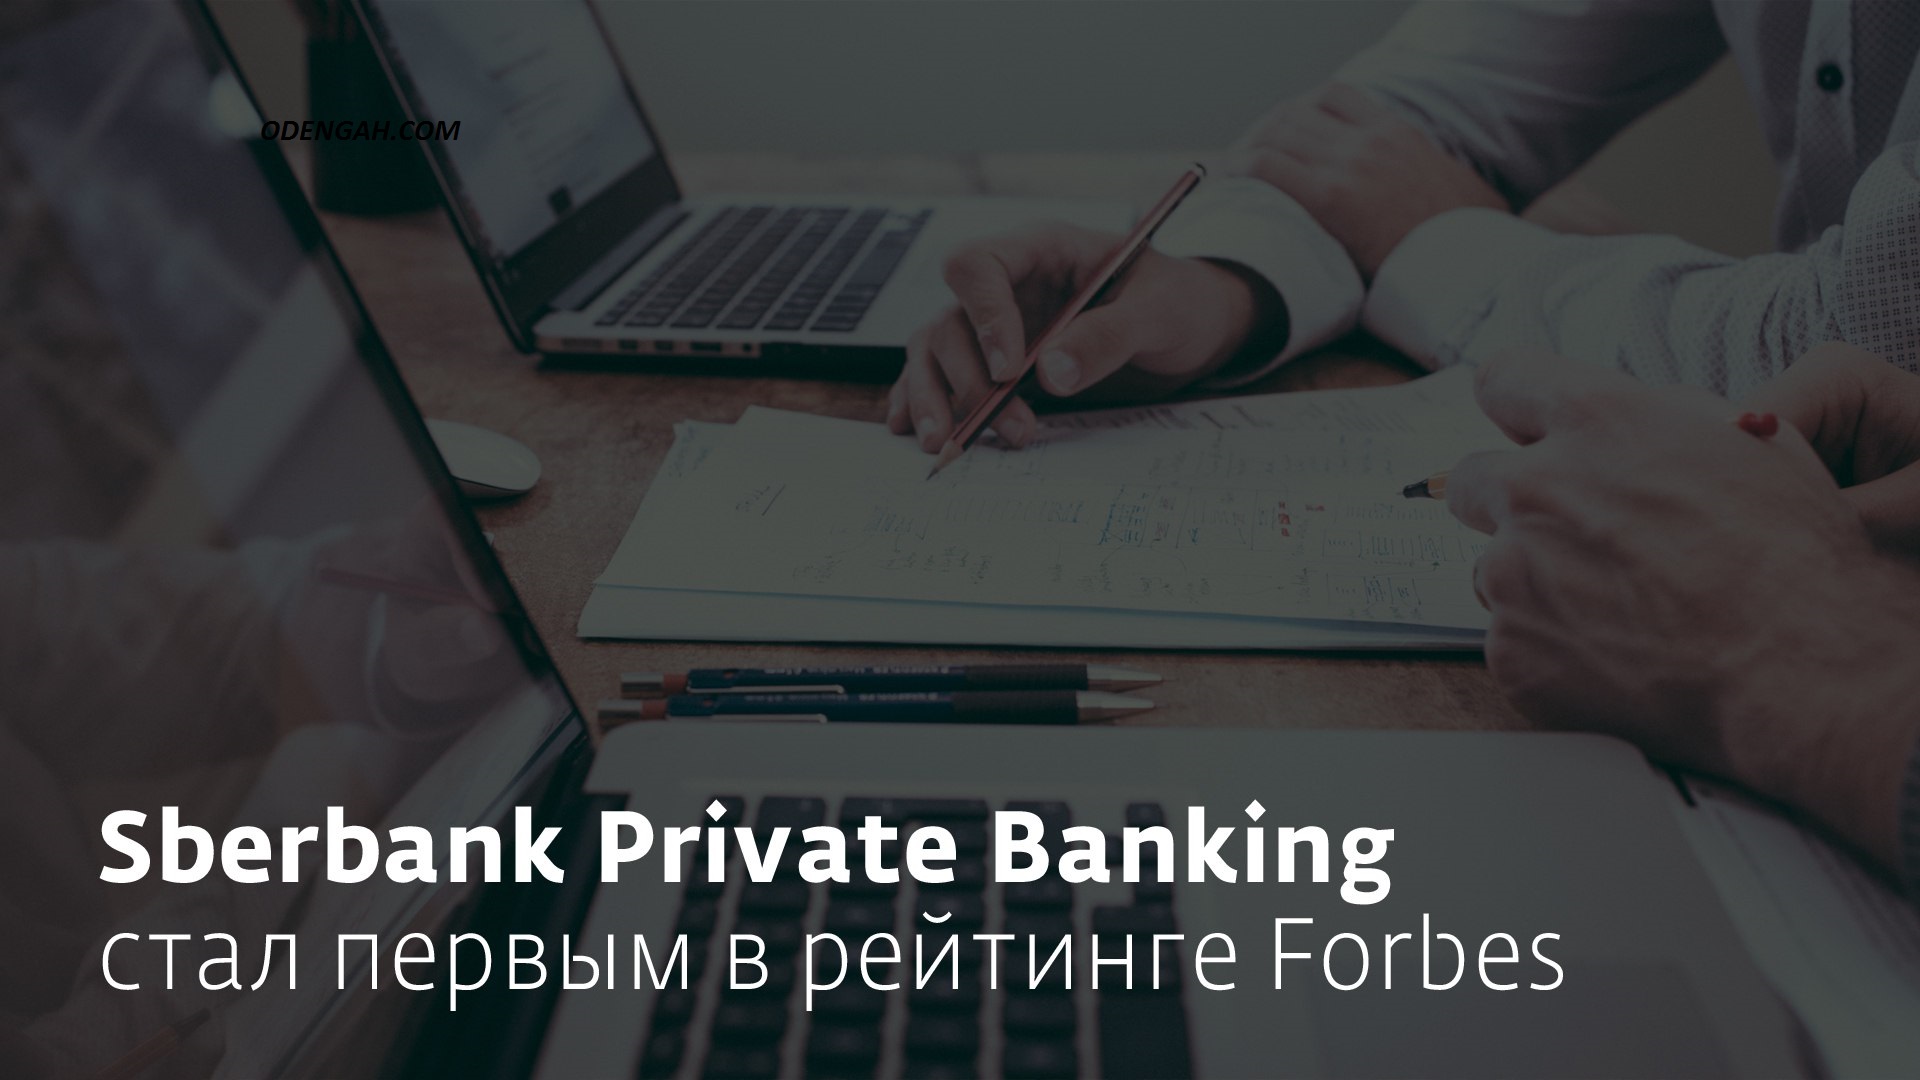 Sberbank Private Banking в рейтинге Forbes